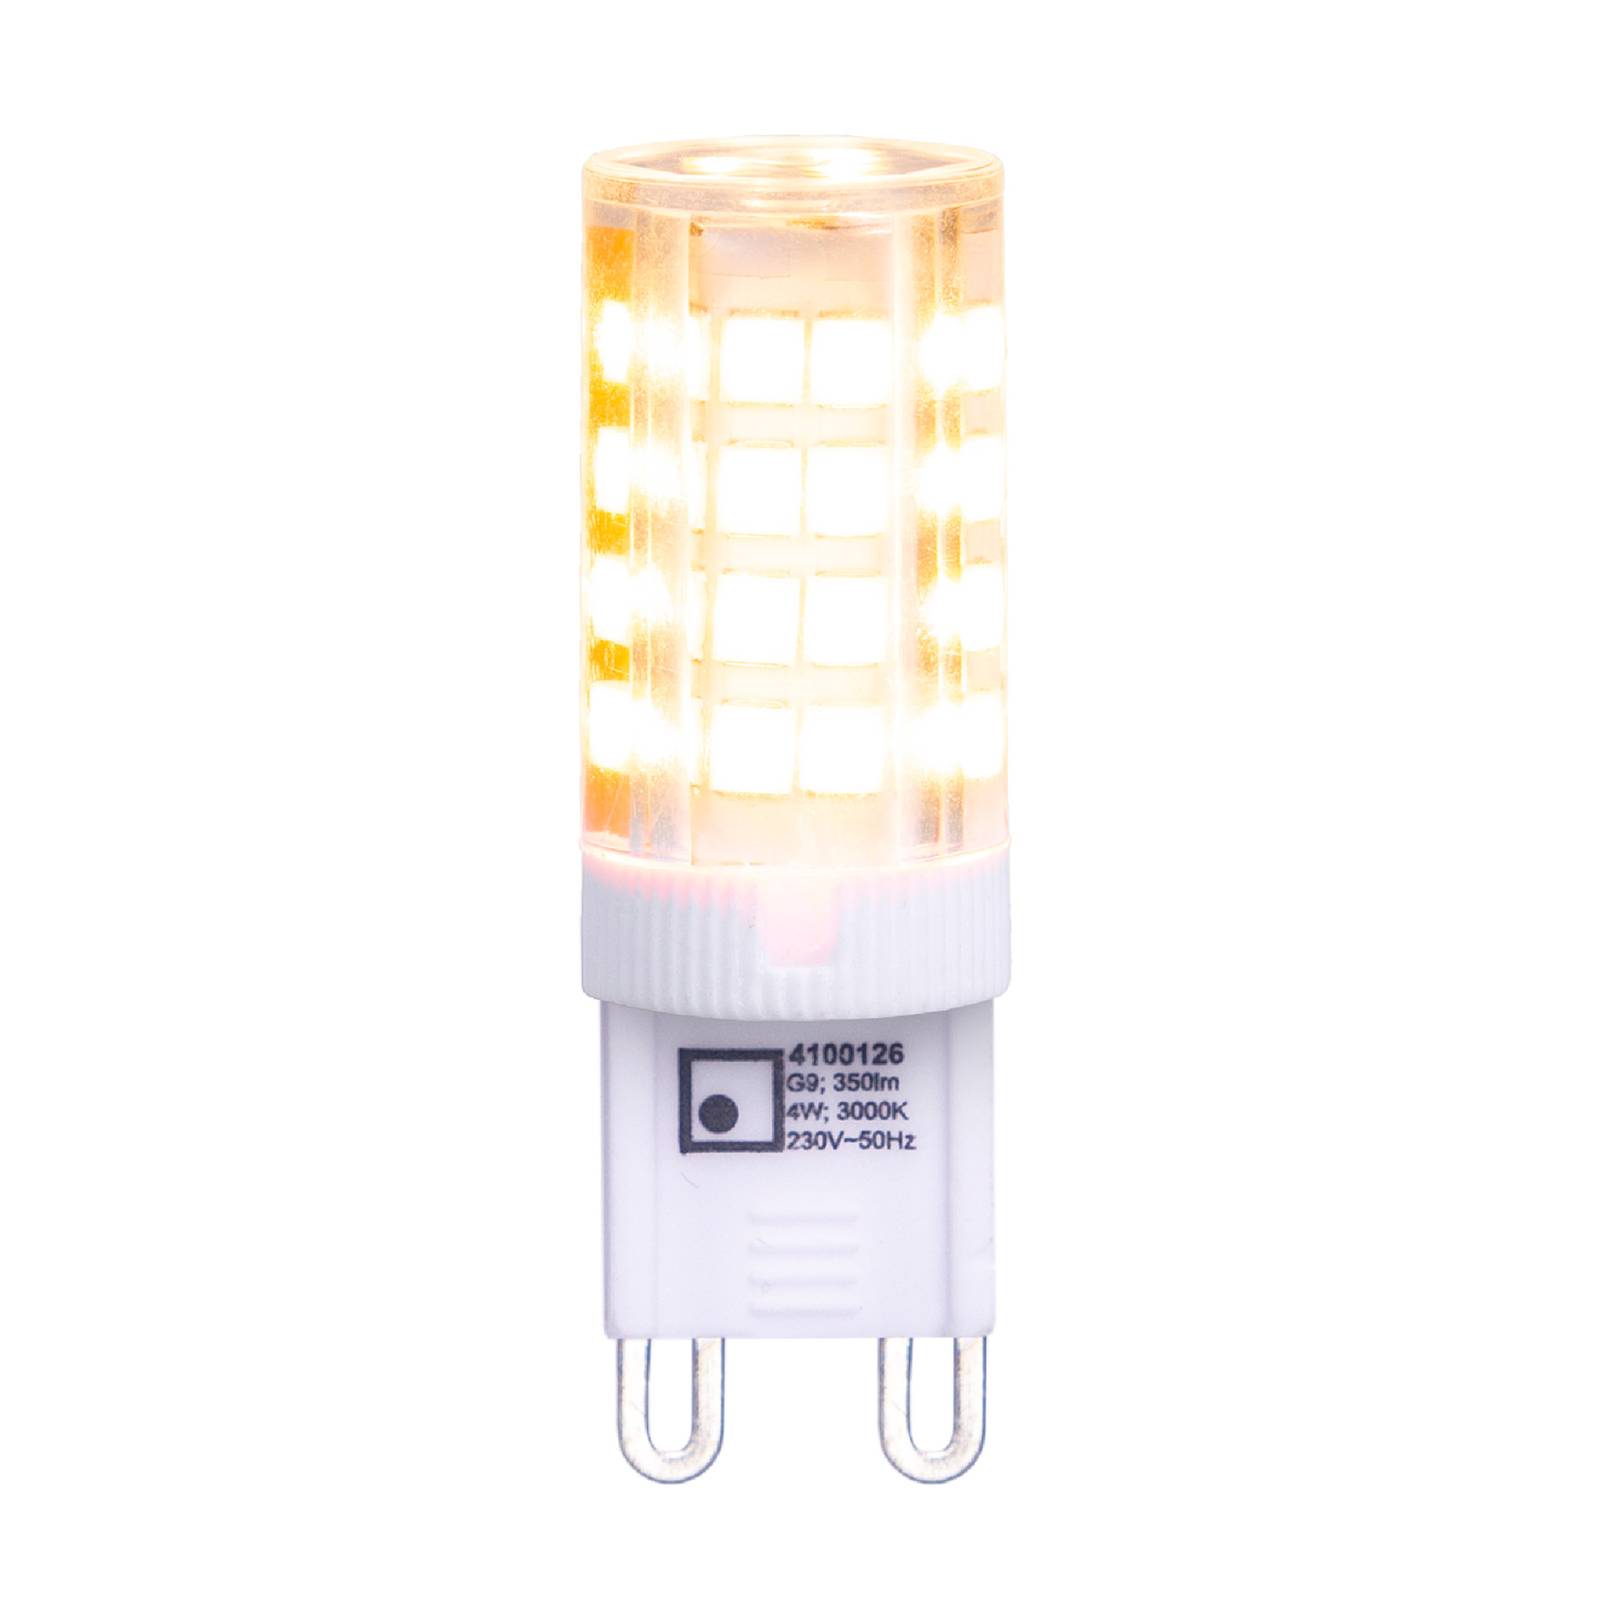 Näve LED-stiftlampa G9 3,5W varmvit 350 lumen 6-pack